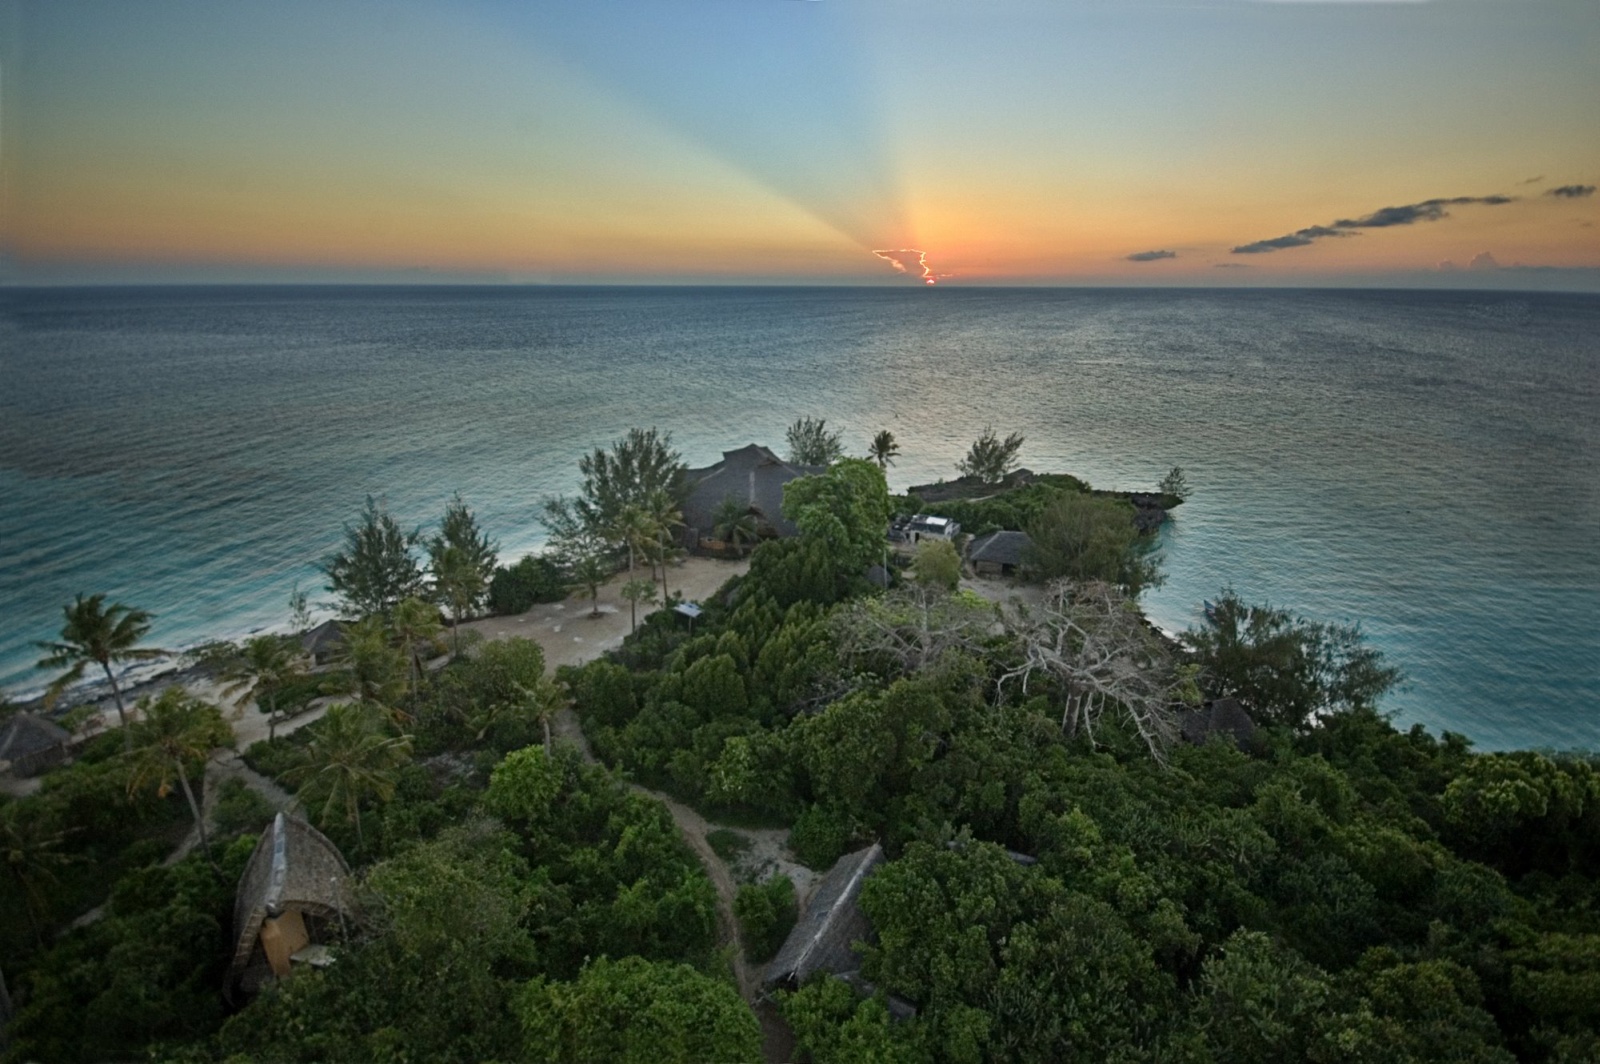 Chumbe Island Resort - островной экологический курорт на Занзибаре